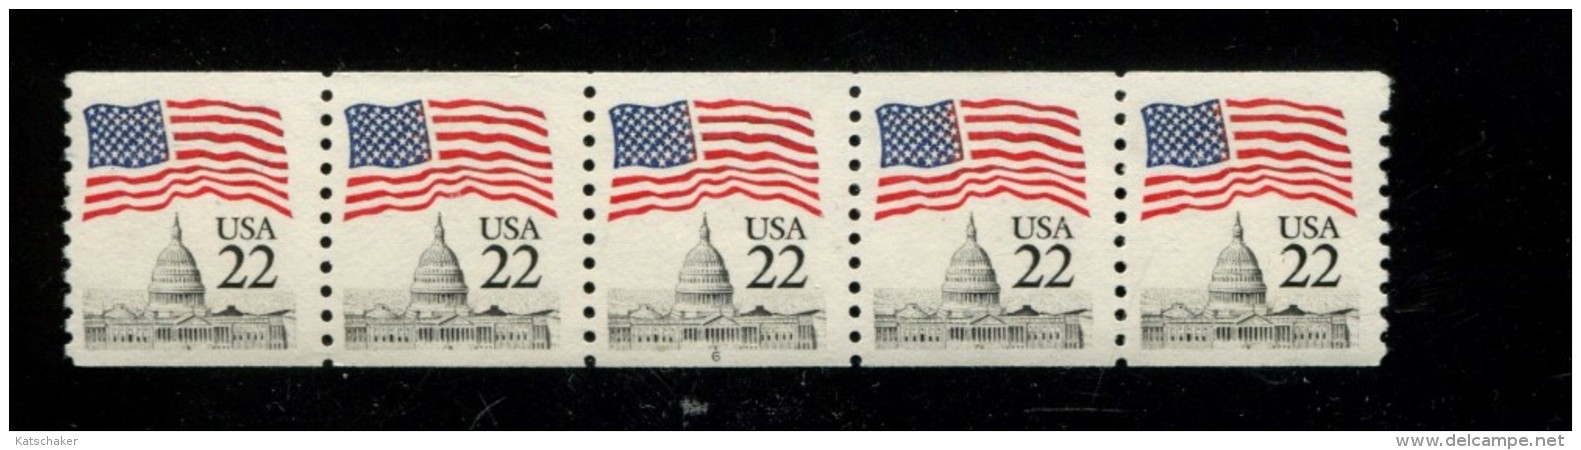 USA POSTFRIS MINT NEVER HINGED POSTFRISCH EINWANDFREI SCOTT 2115 Plate 6 - Roulettes (Numéros De Planches)